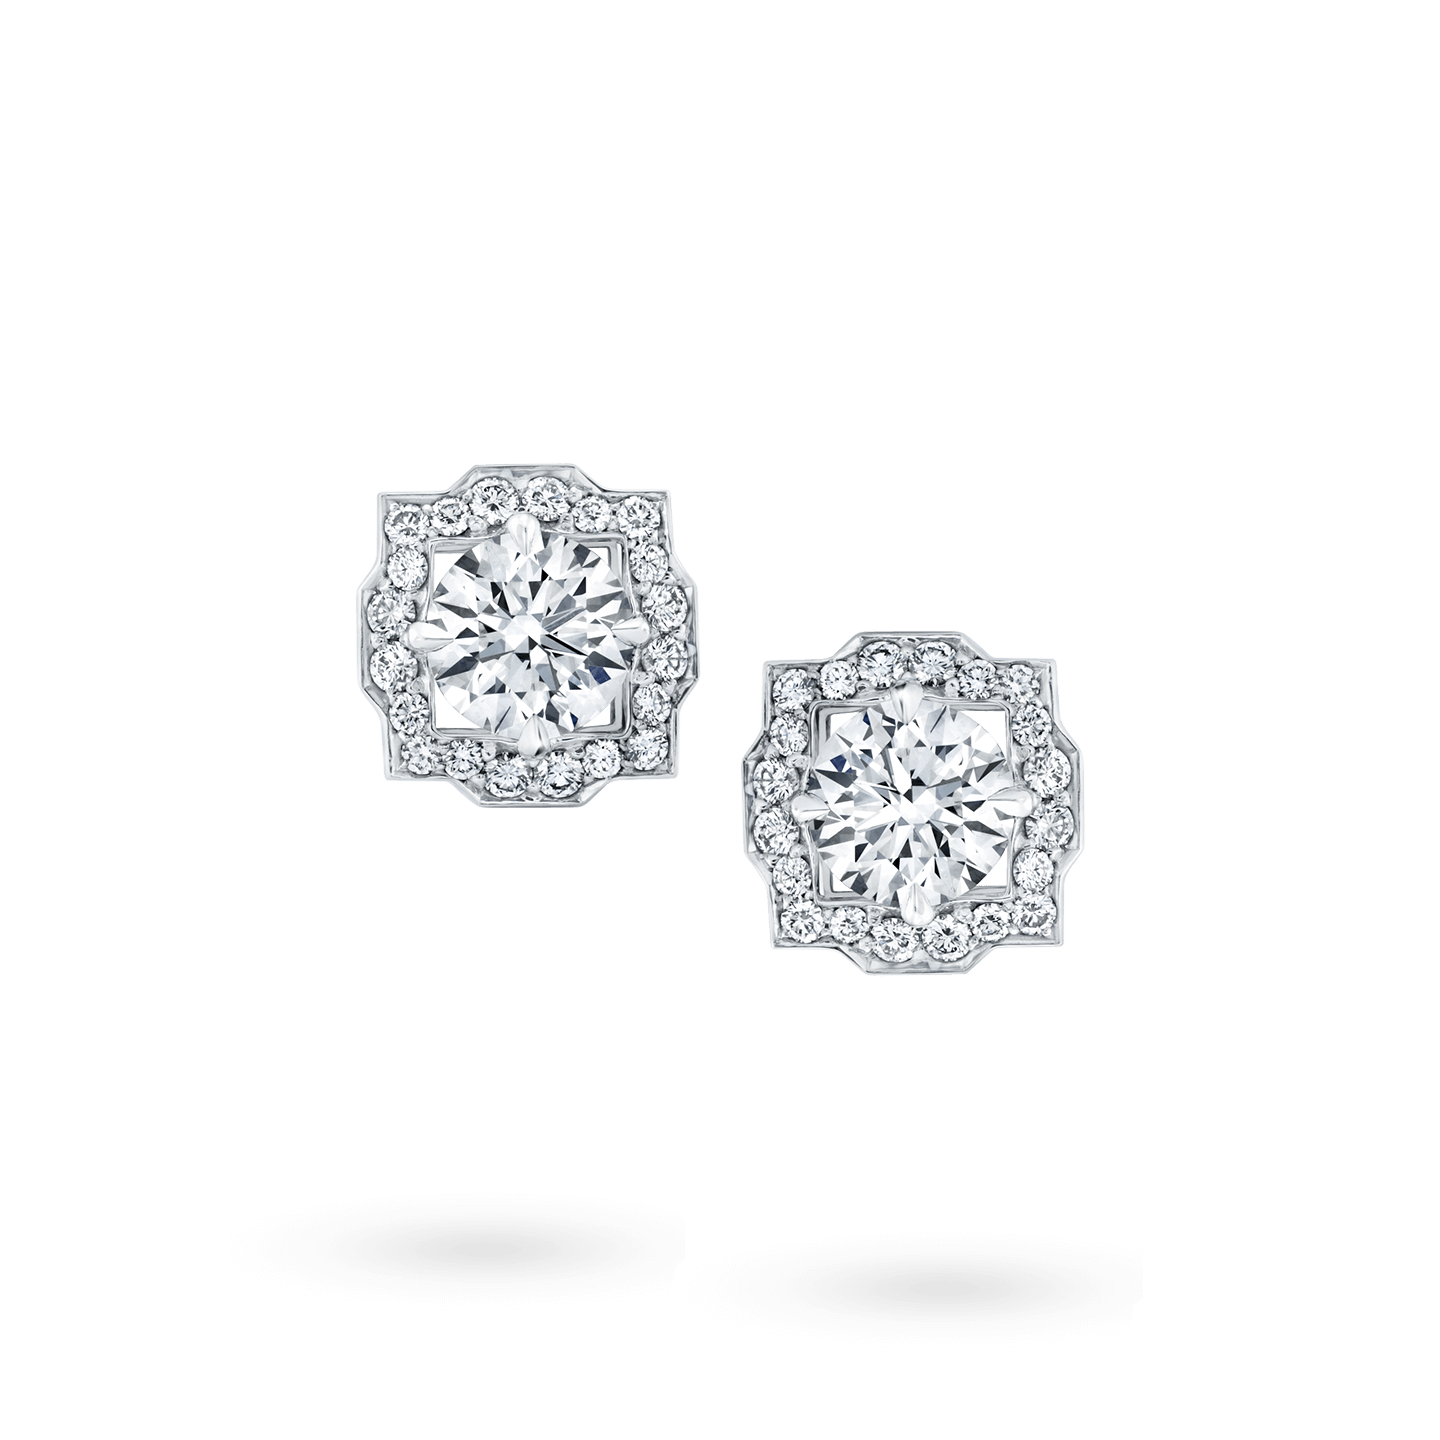 Belle Diamond Earstuds, Product Image 1